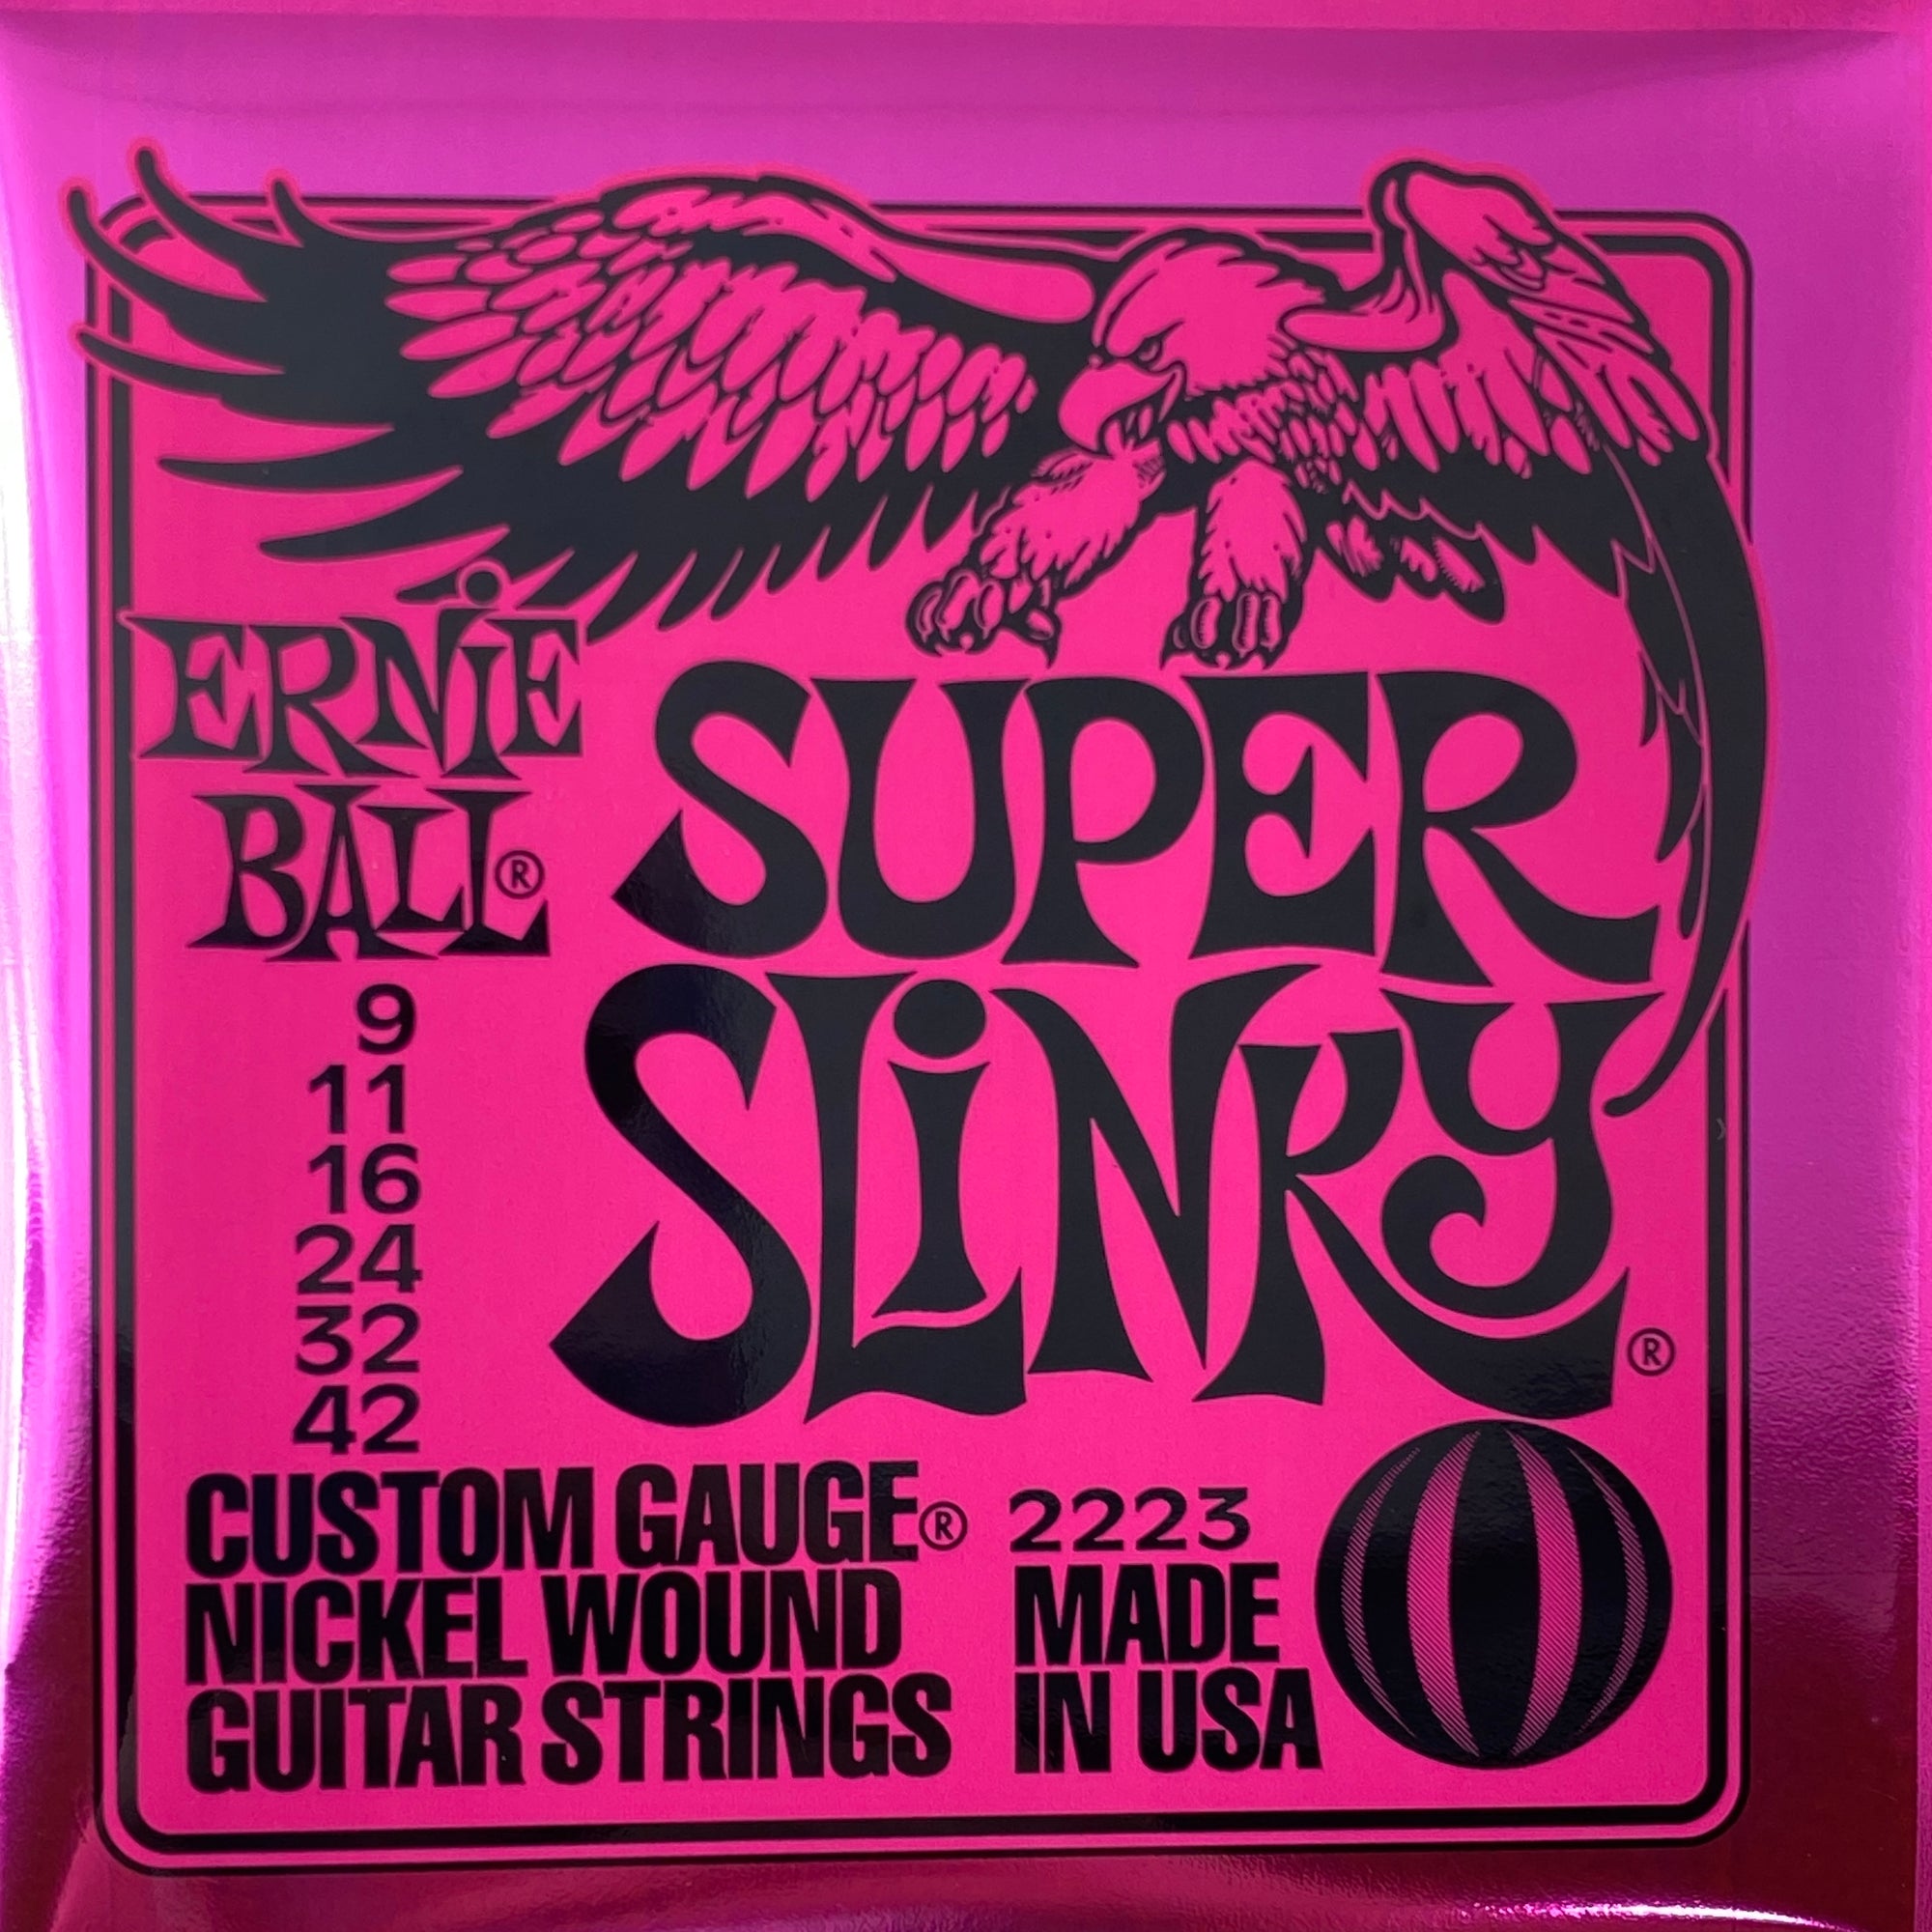 Ernie Ball 2223 Super Slinky Nickel Wound Electric Guitar Strings - Banjo  Ben's General Store